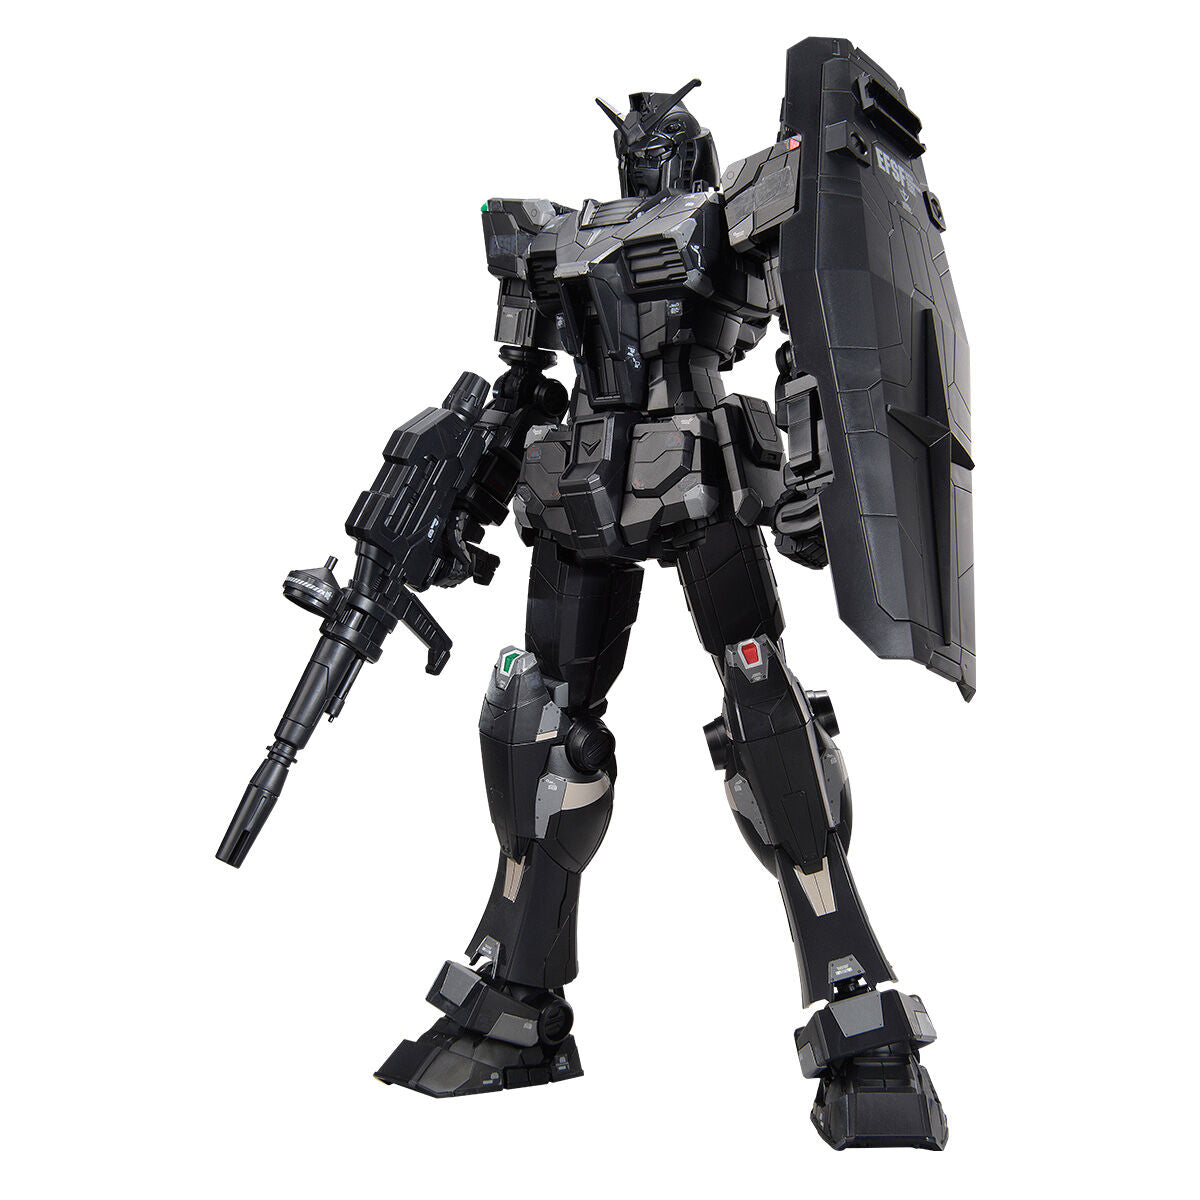 GUNDAM FACTORY YOKOHAMA dedicated eco plastic 1/100 RX-78F00 Gundam